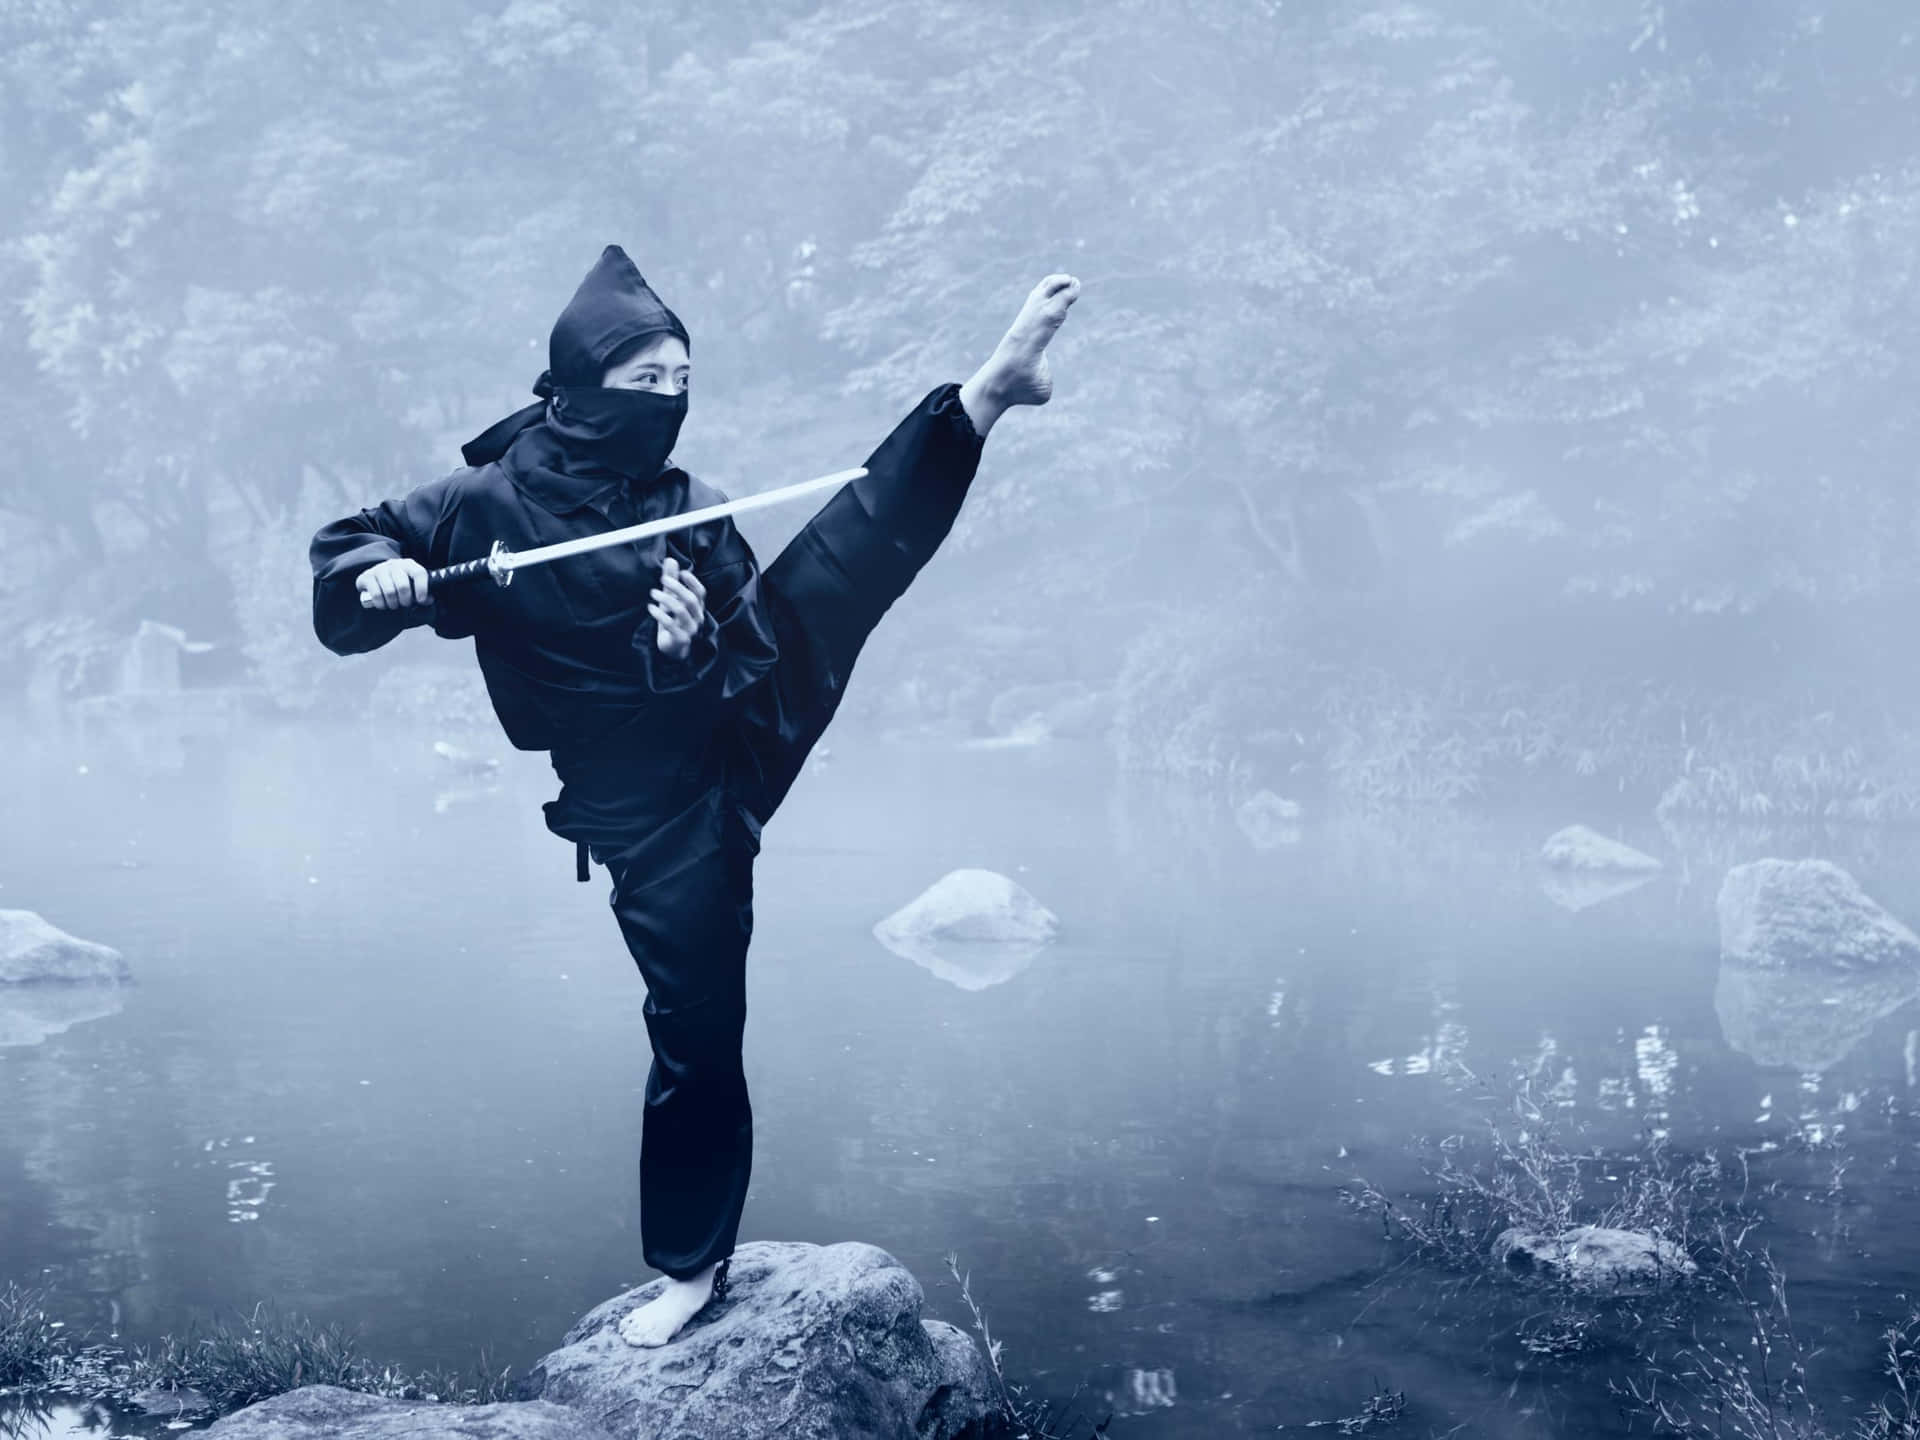 Be Like The Ninja: Strong, Silent, and Alert